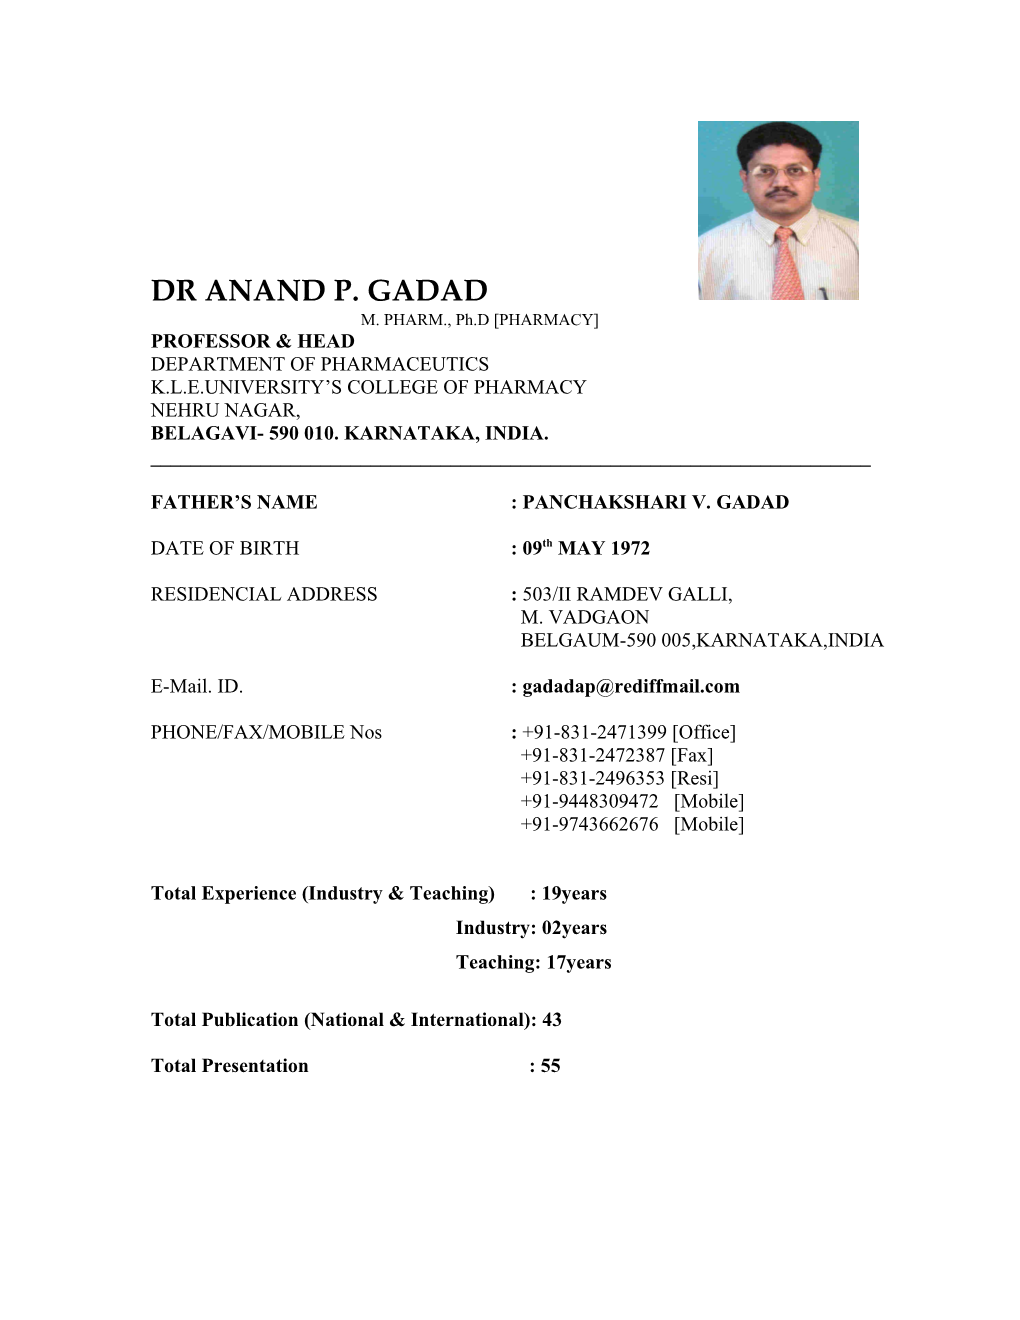 Dr Anand P. Gadad